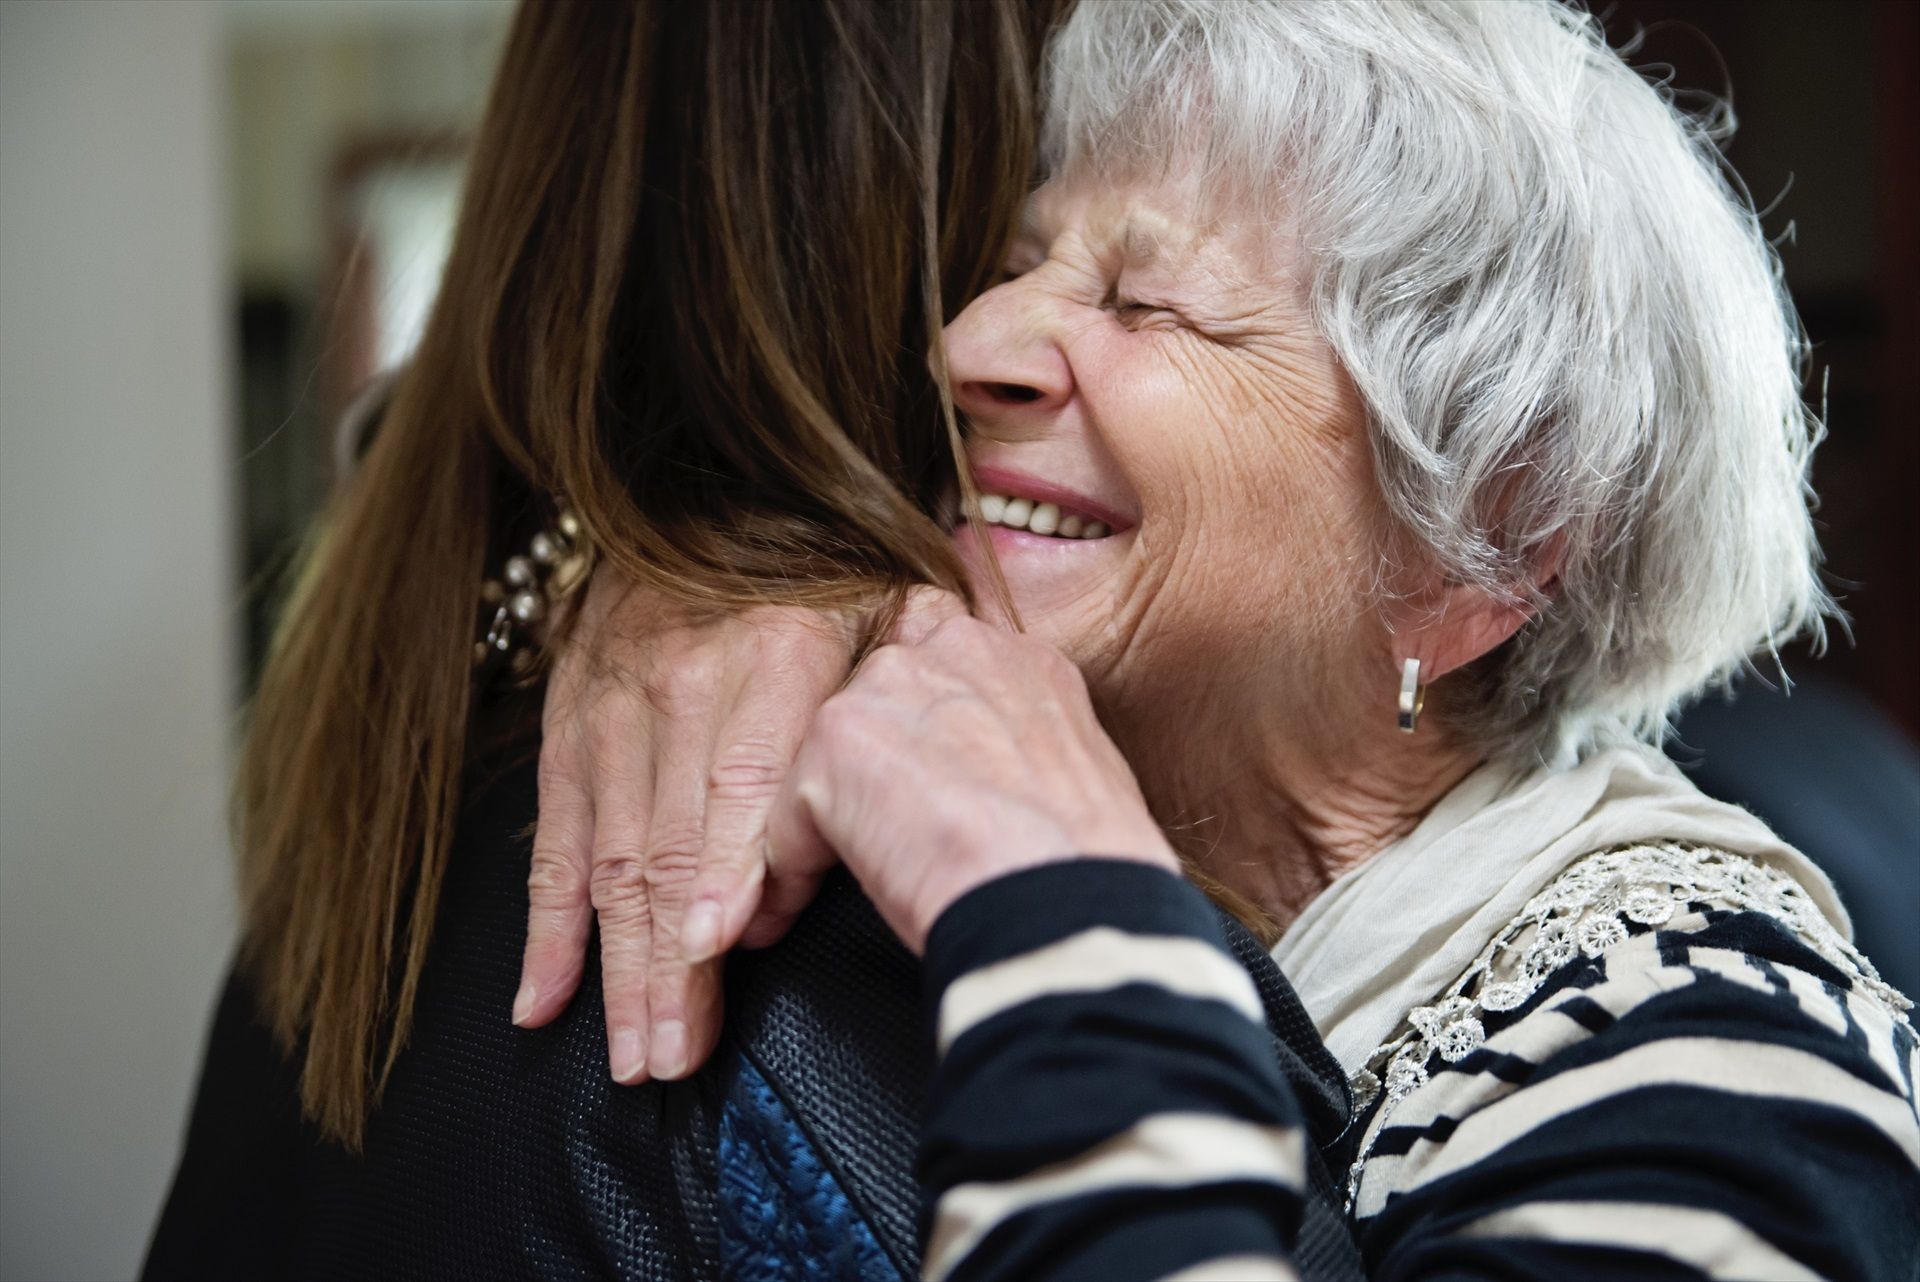 Un neuropsicólogo explica en TikTok por qué nos sentimos tan unidos a nuestra abuela materna  (Europa Press)